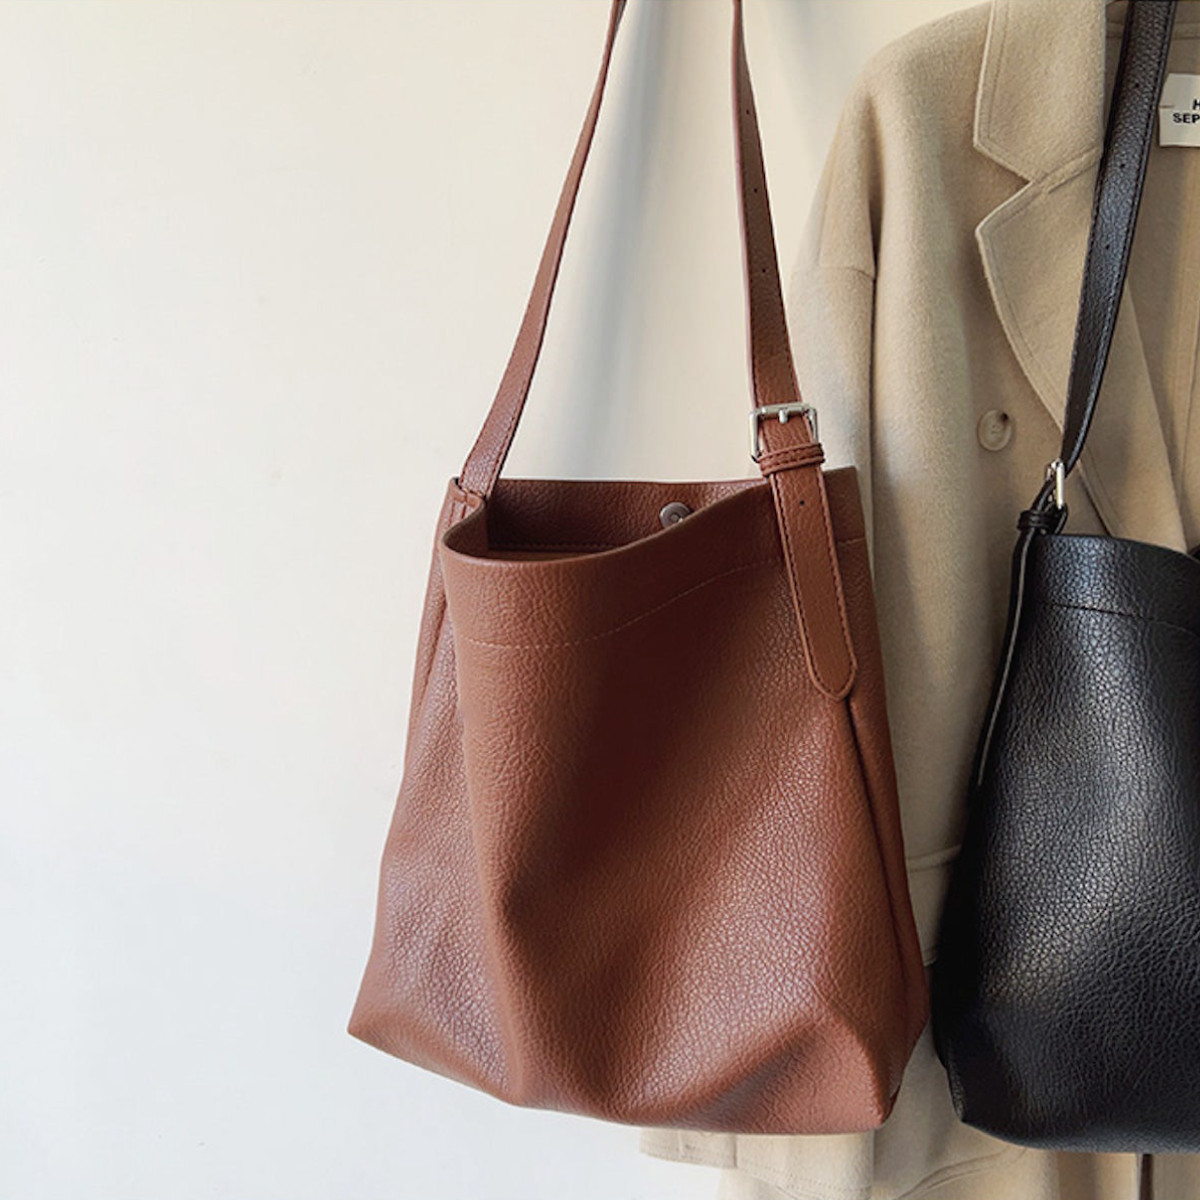 Handmade Leather Bags | Vintage tote bag, Bags, Leather bags handmade